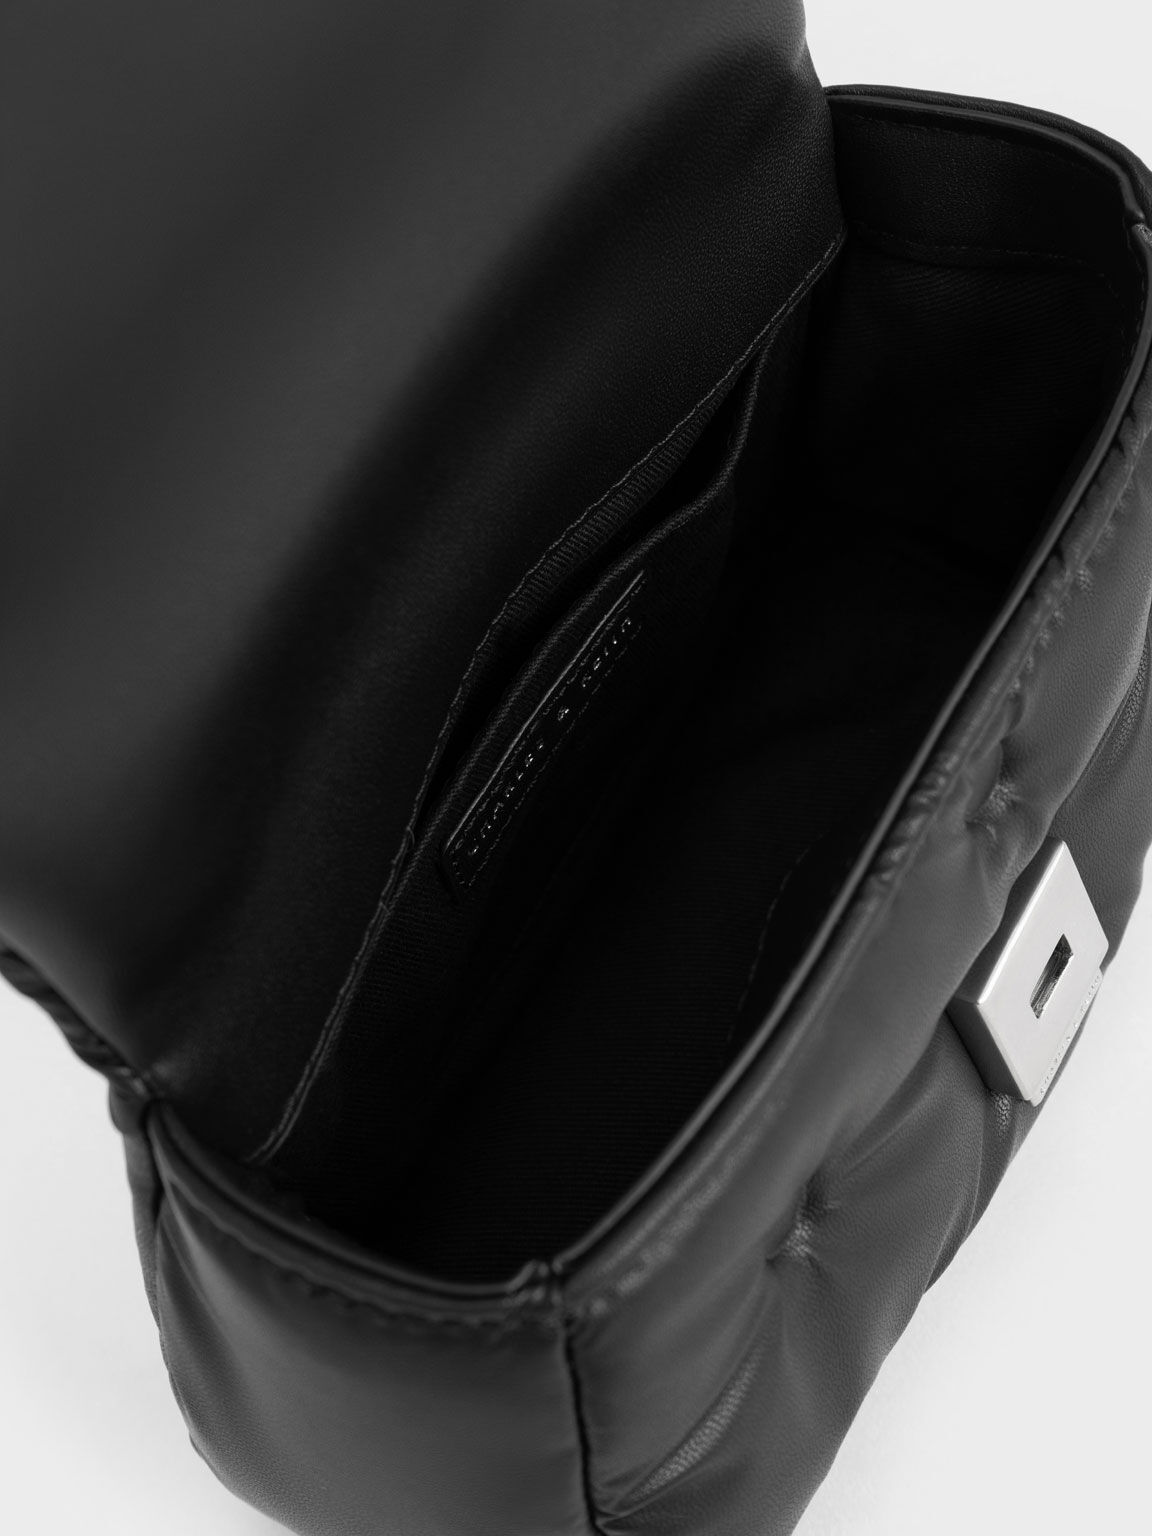 Koi Padded Chain Handle Bag, Black, hi-res